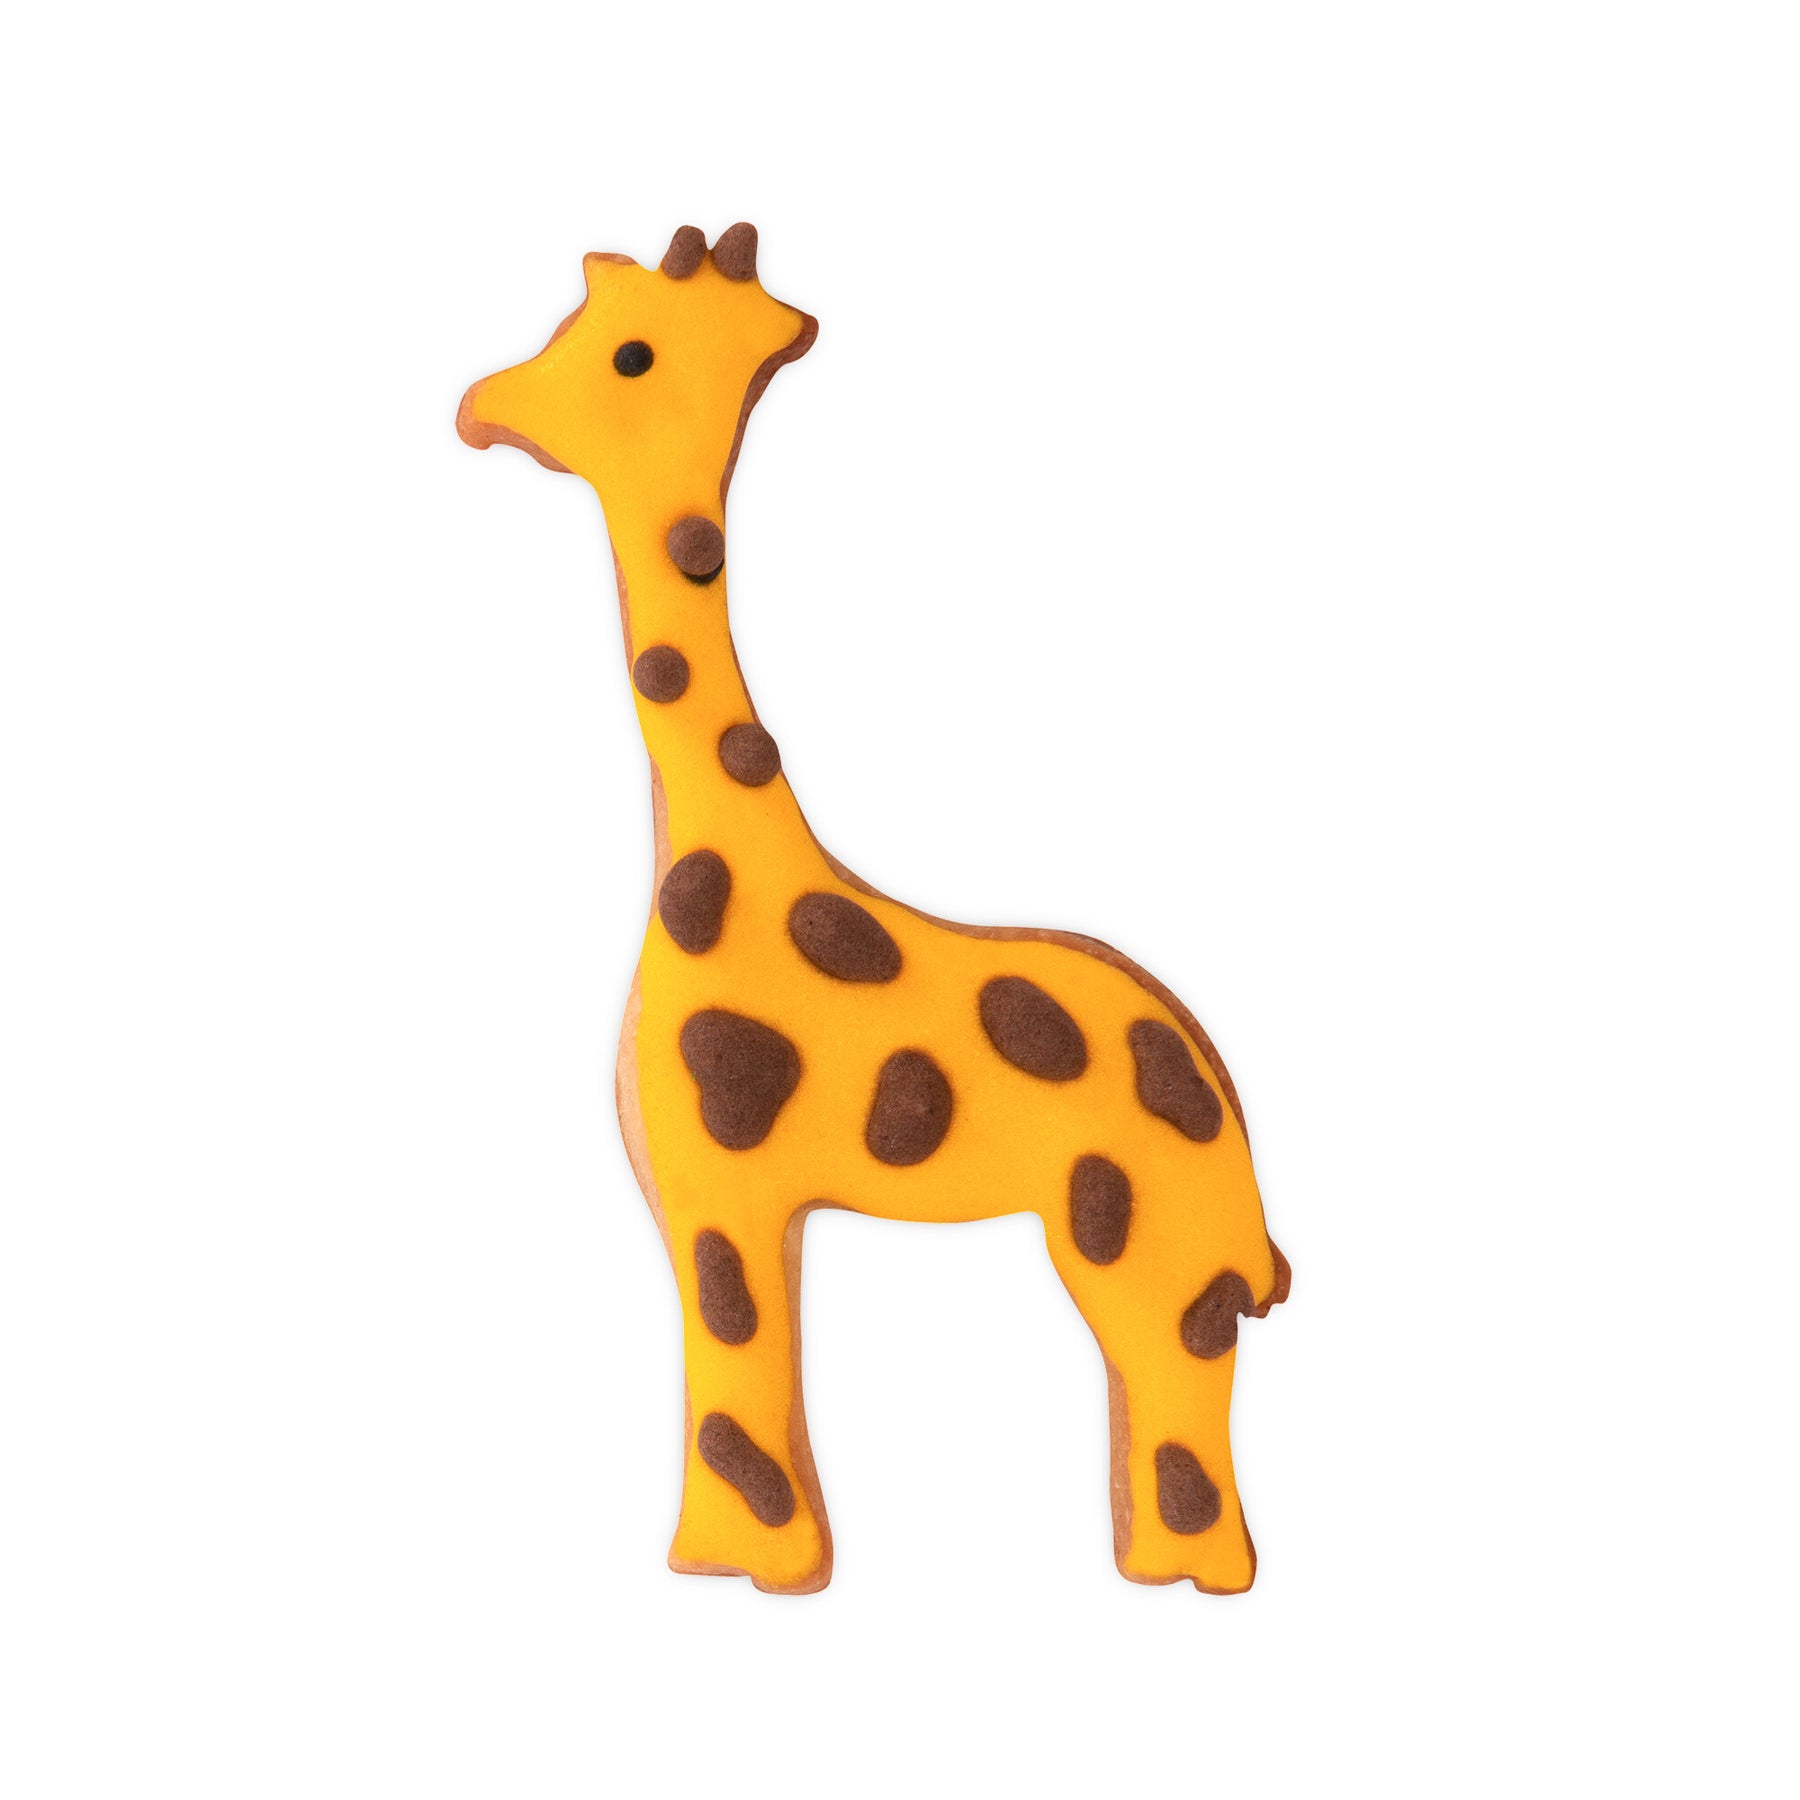 Präge-Ausstecher Giraffe mit Auswerfer 6cm